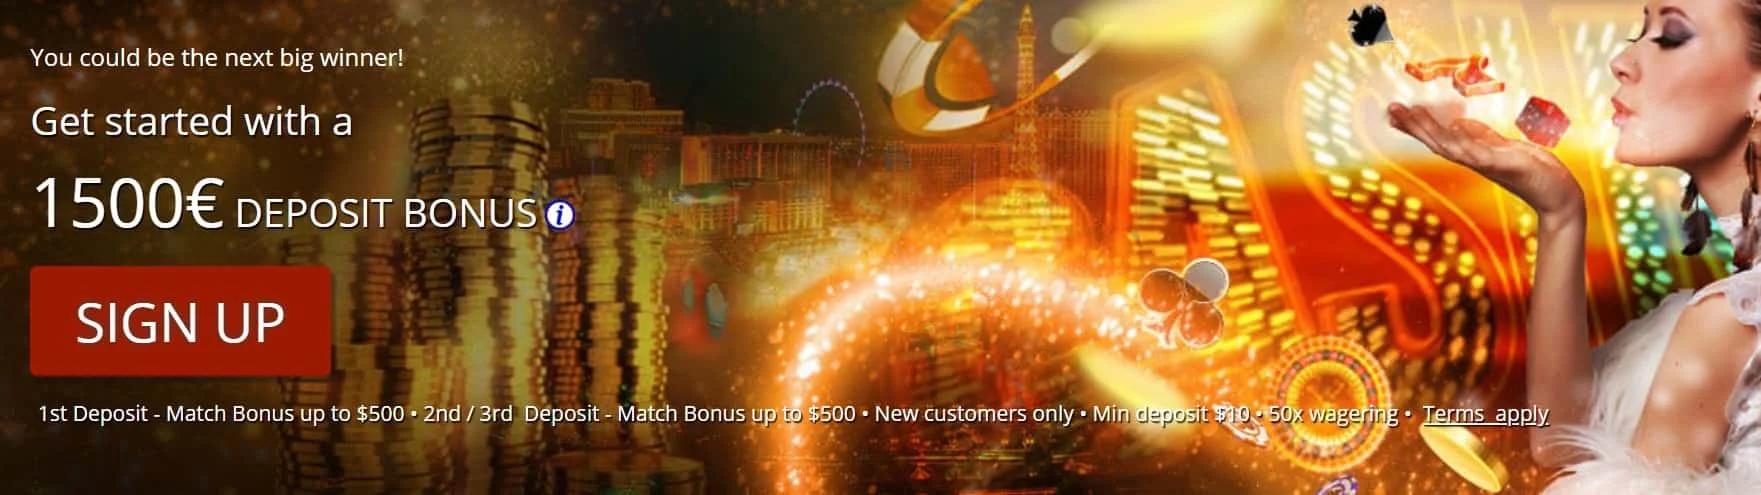 all slots casino welcome bonus-min